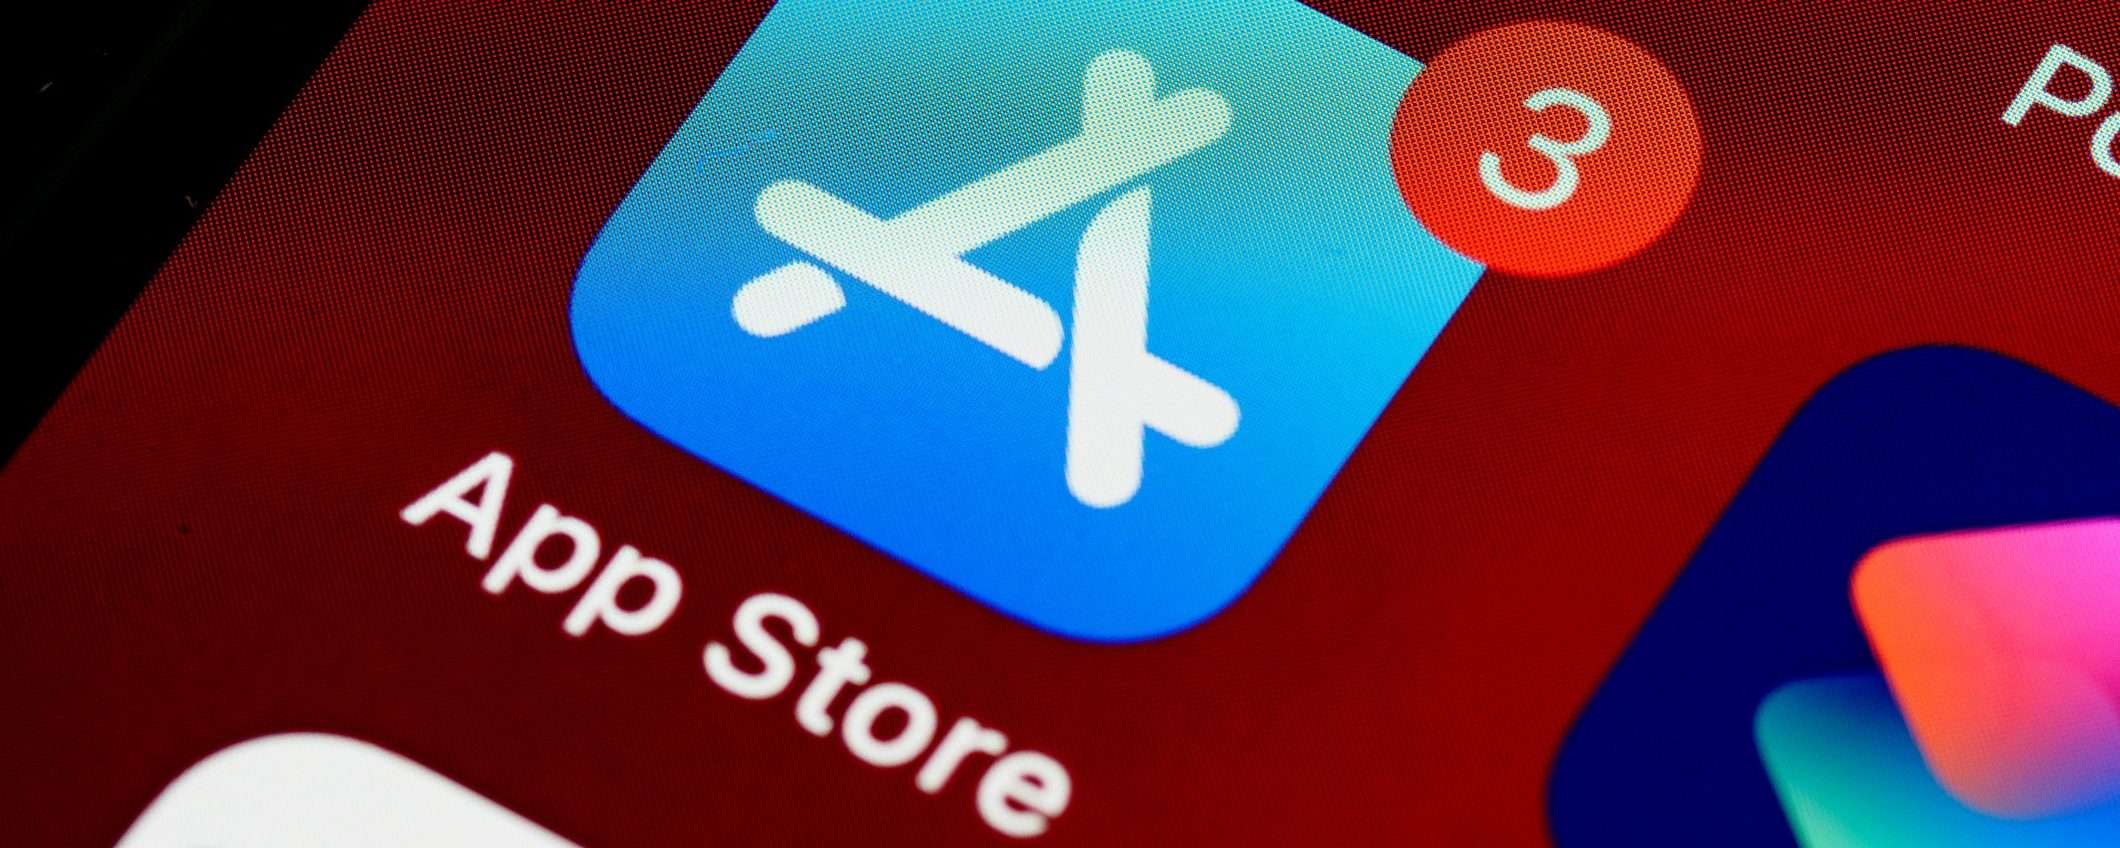 App Store: scoperta una nuova app truffa multimilionaria